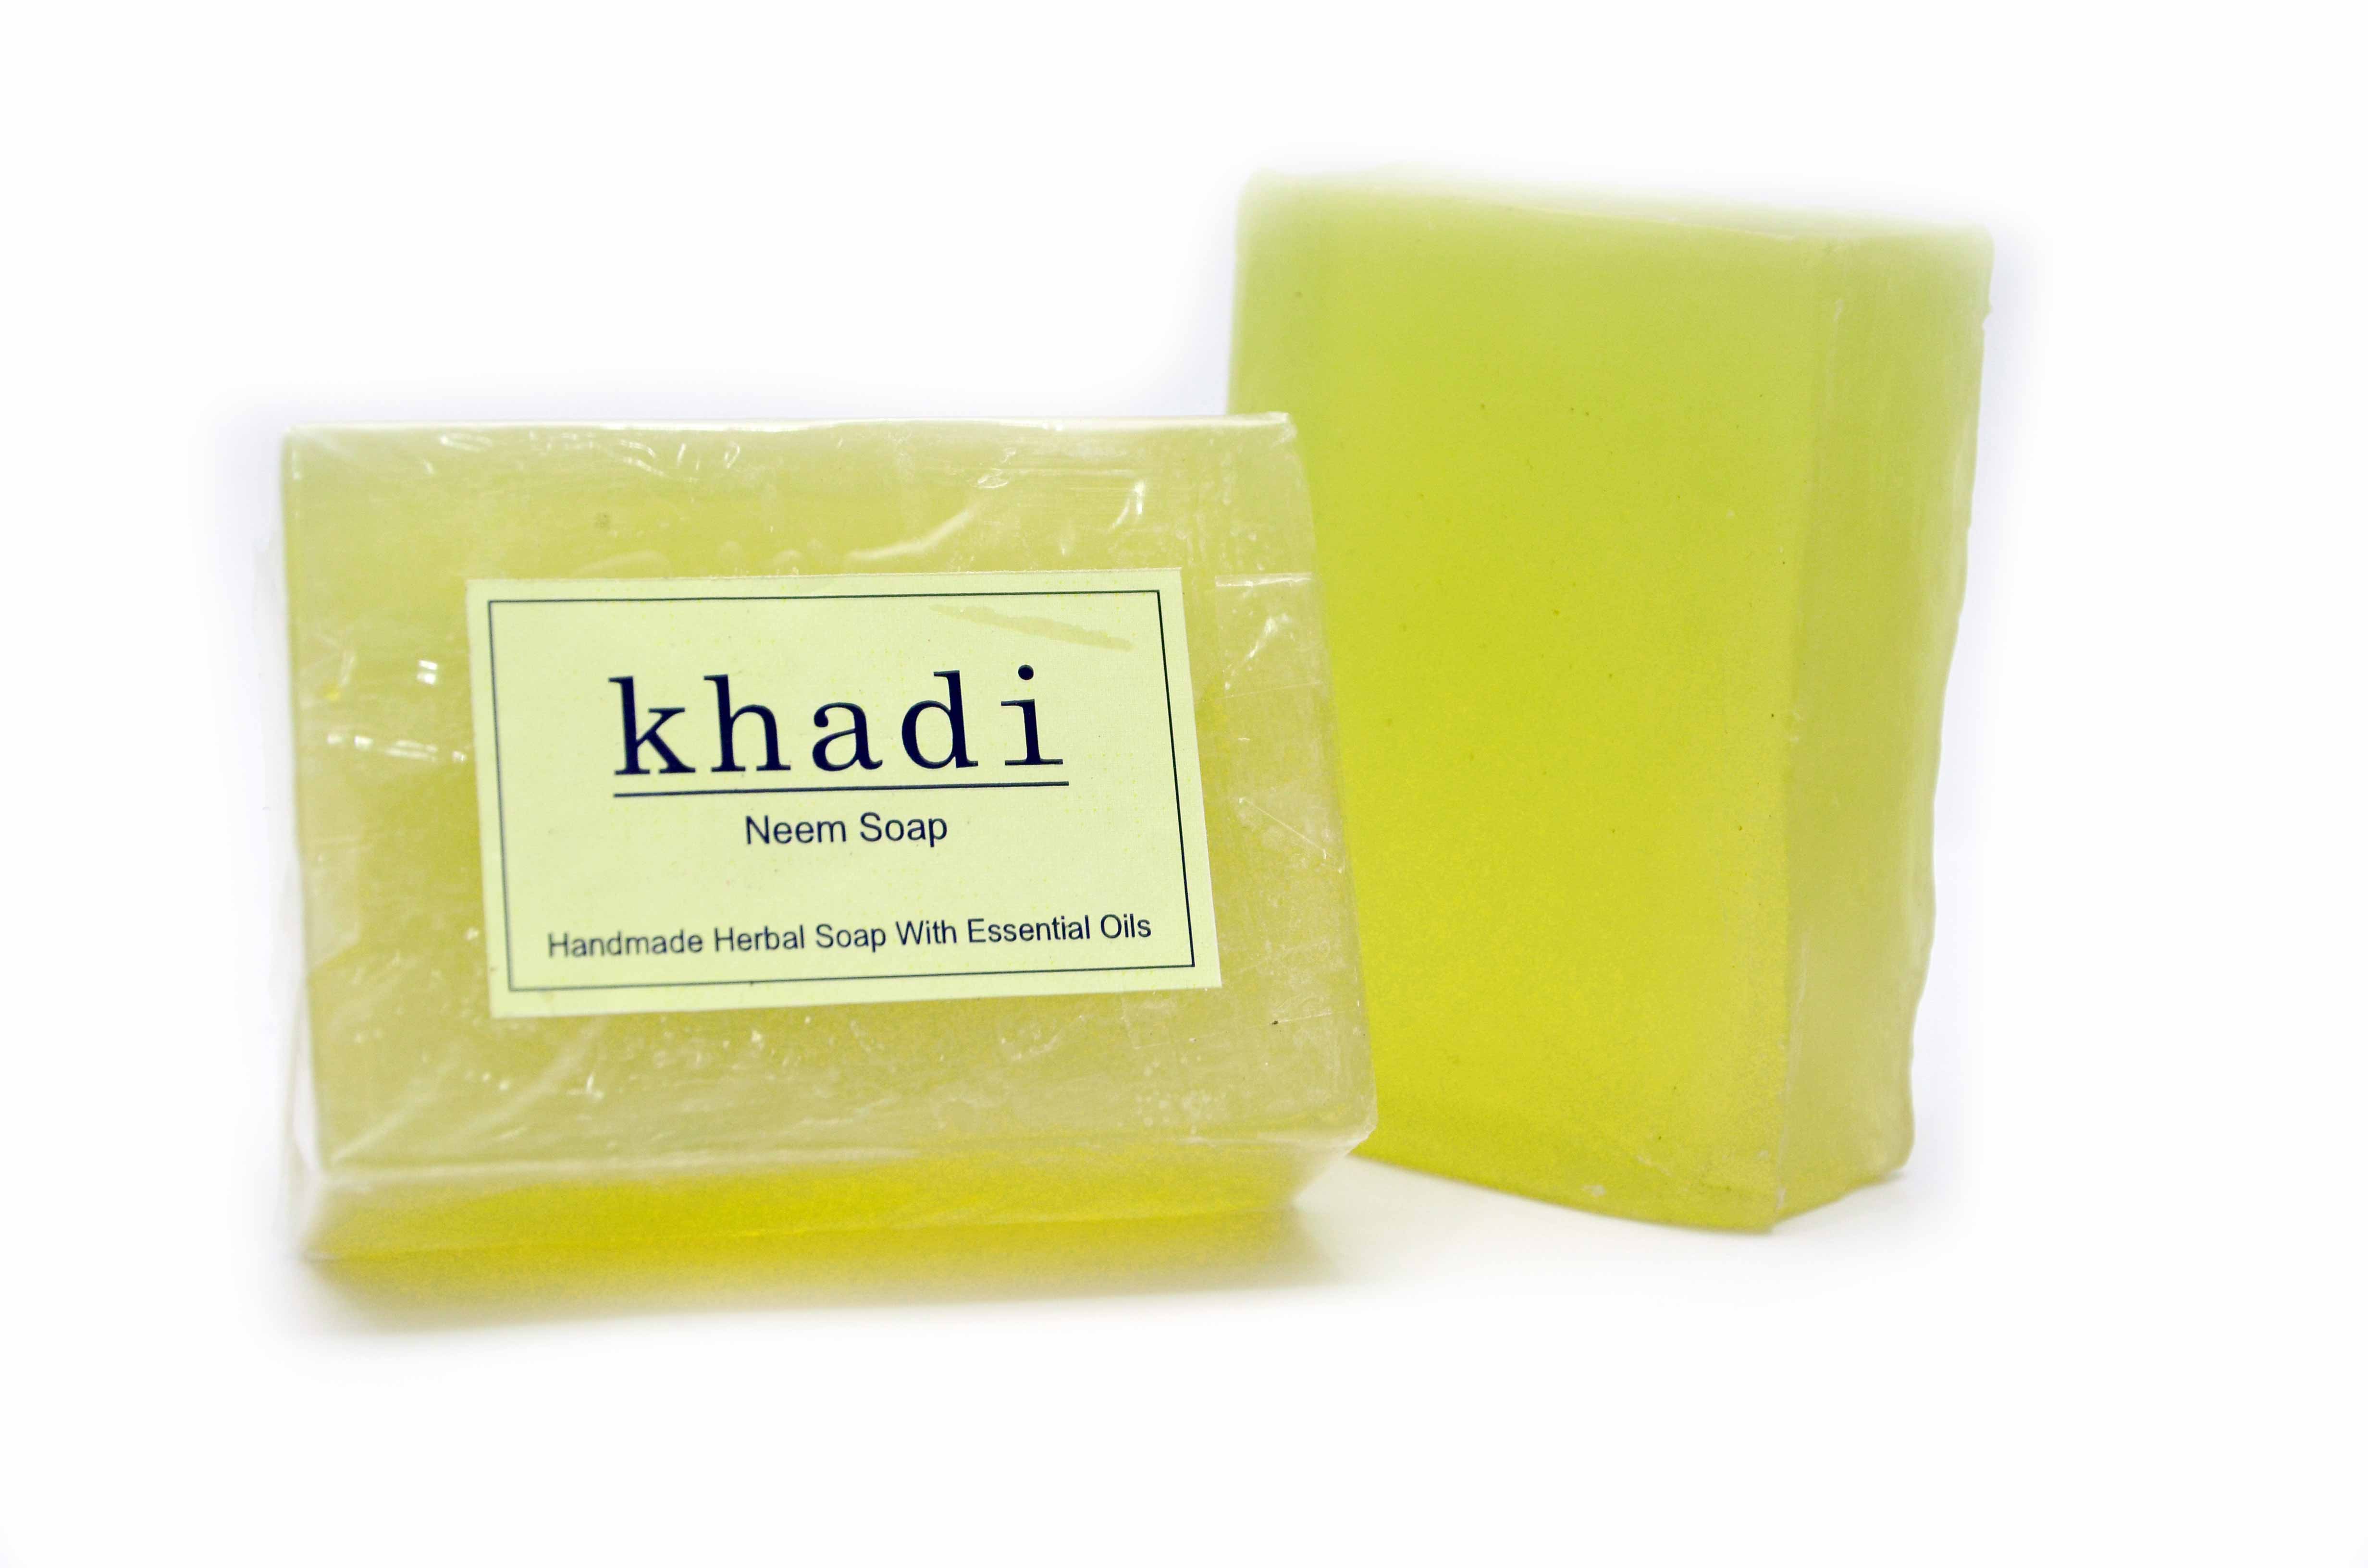 Buy Vagad's Khadi Neem Soap at Best Price Online